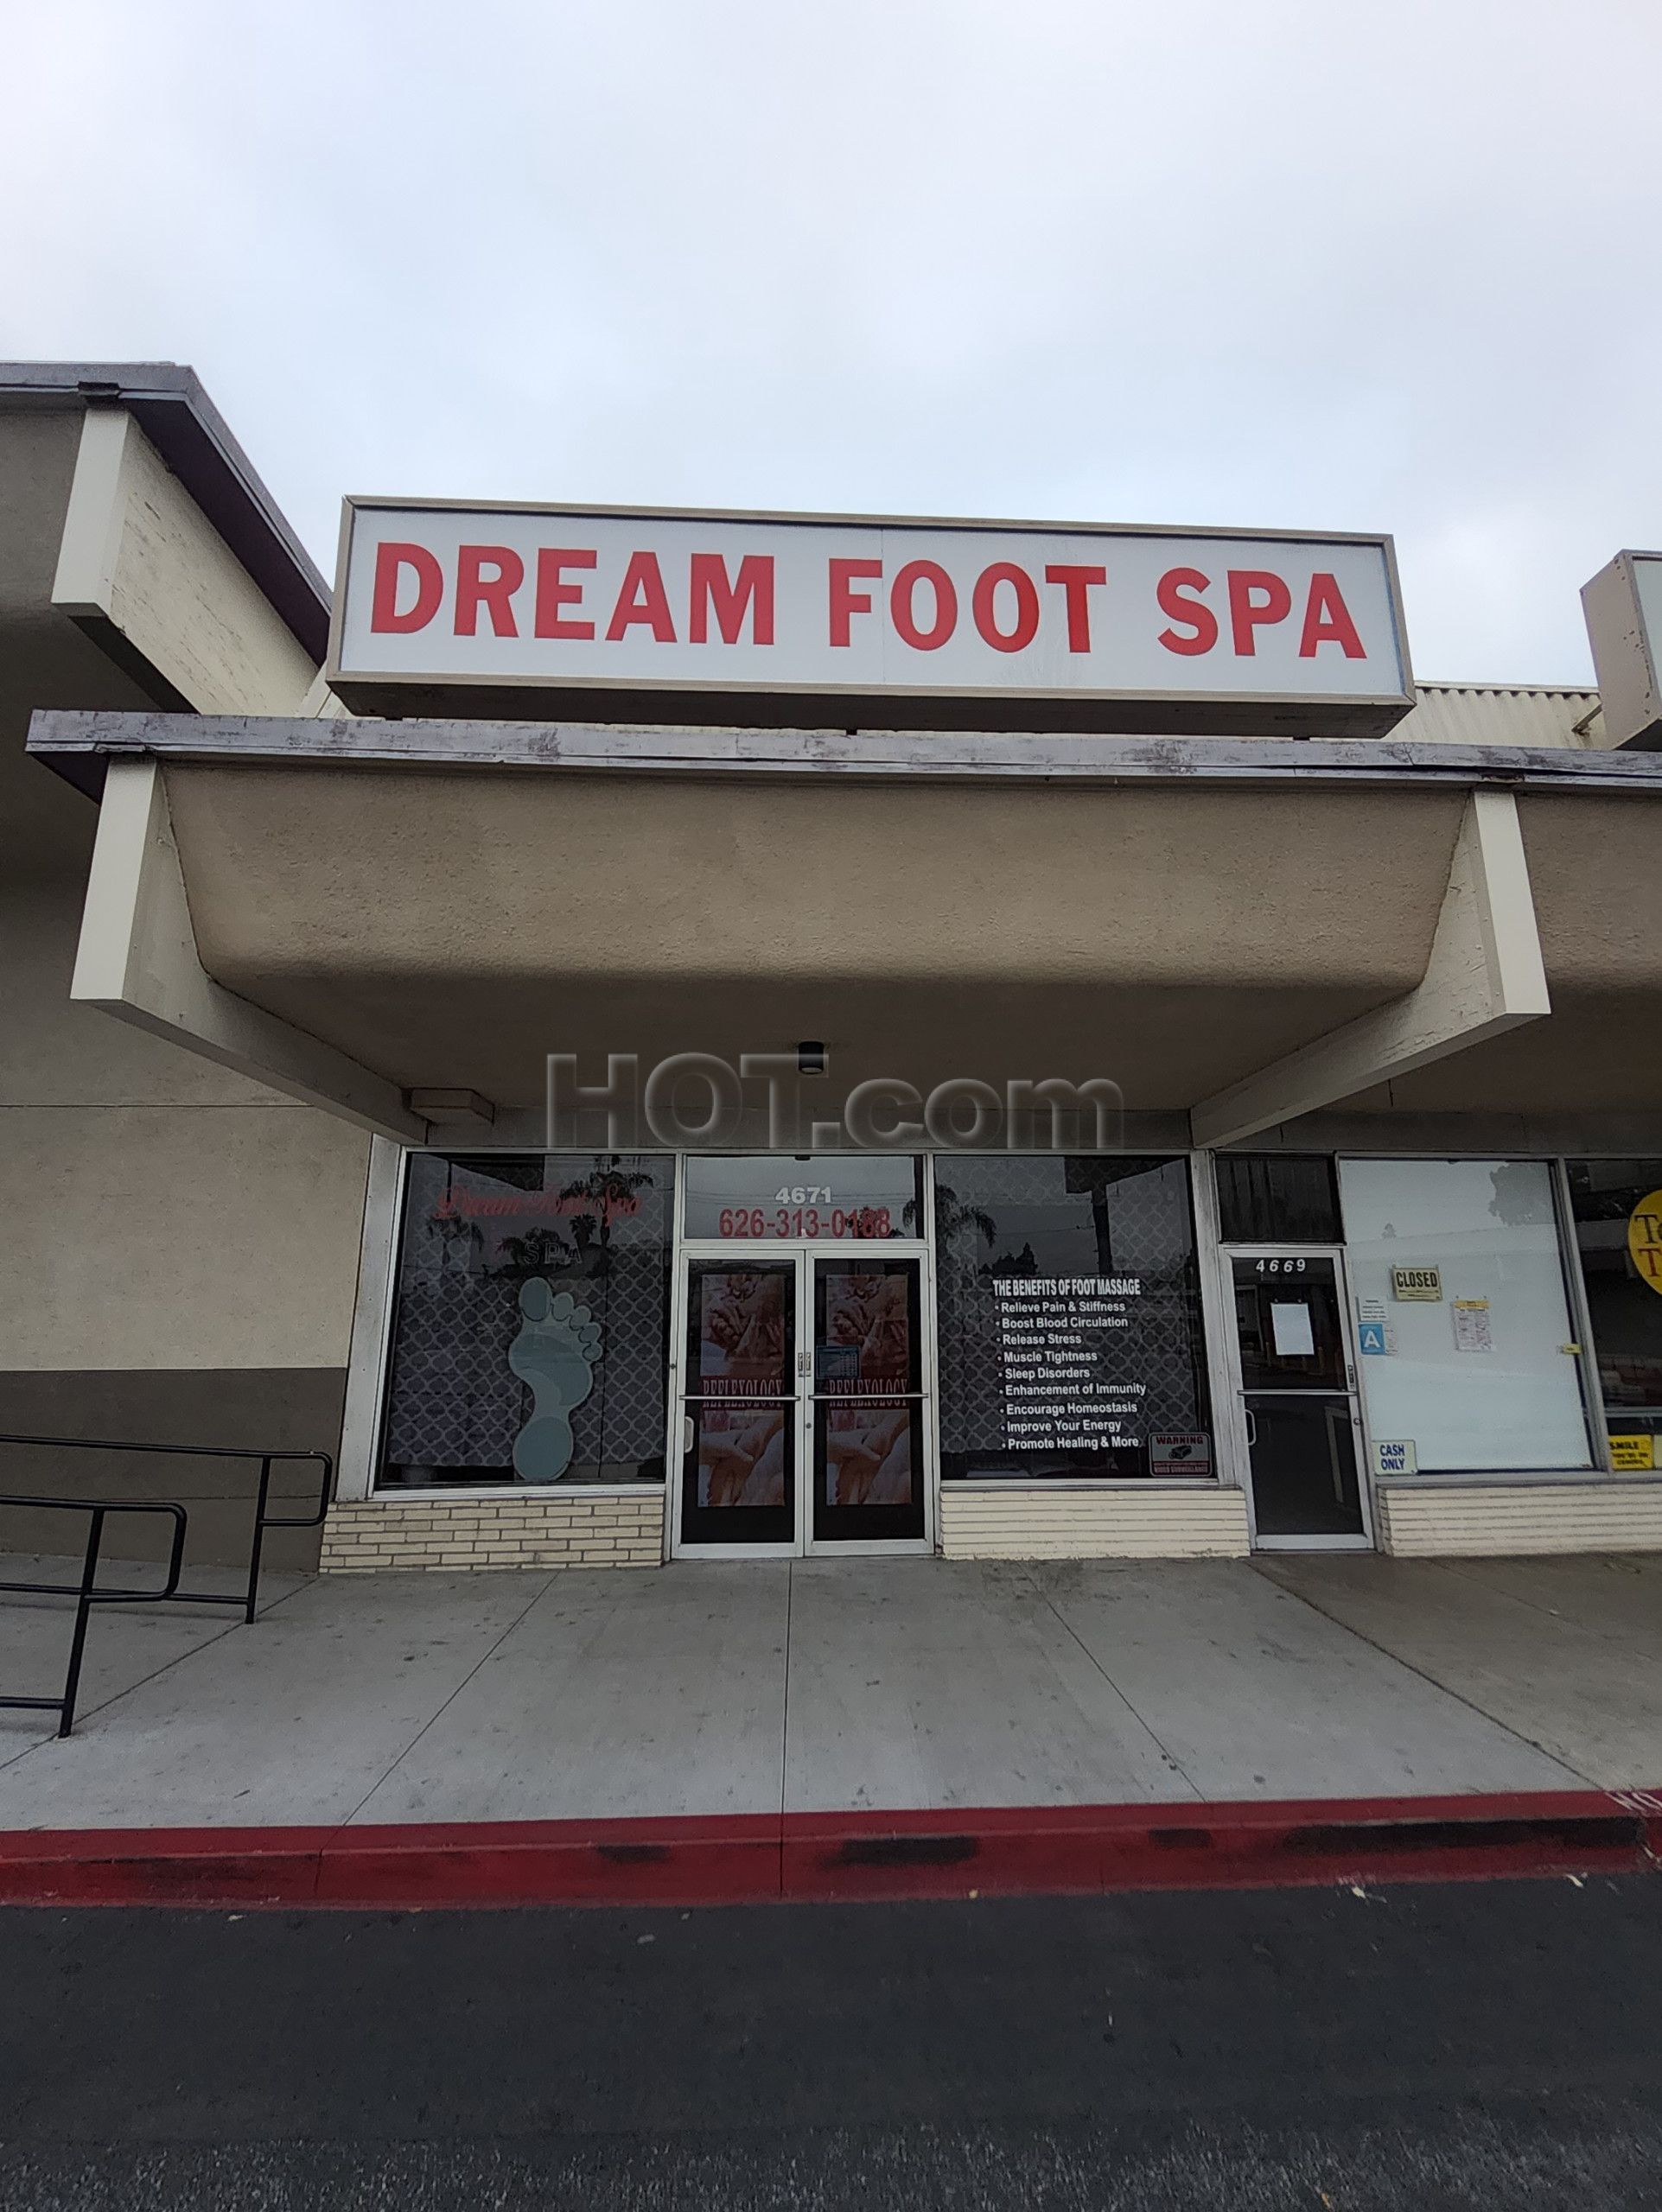 Torrance, California Dream Foot Spa